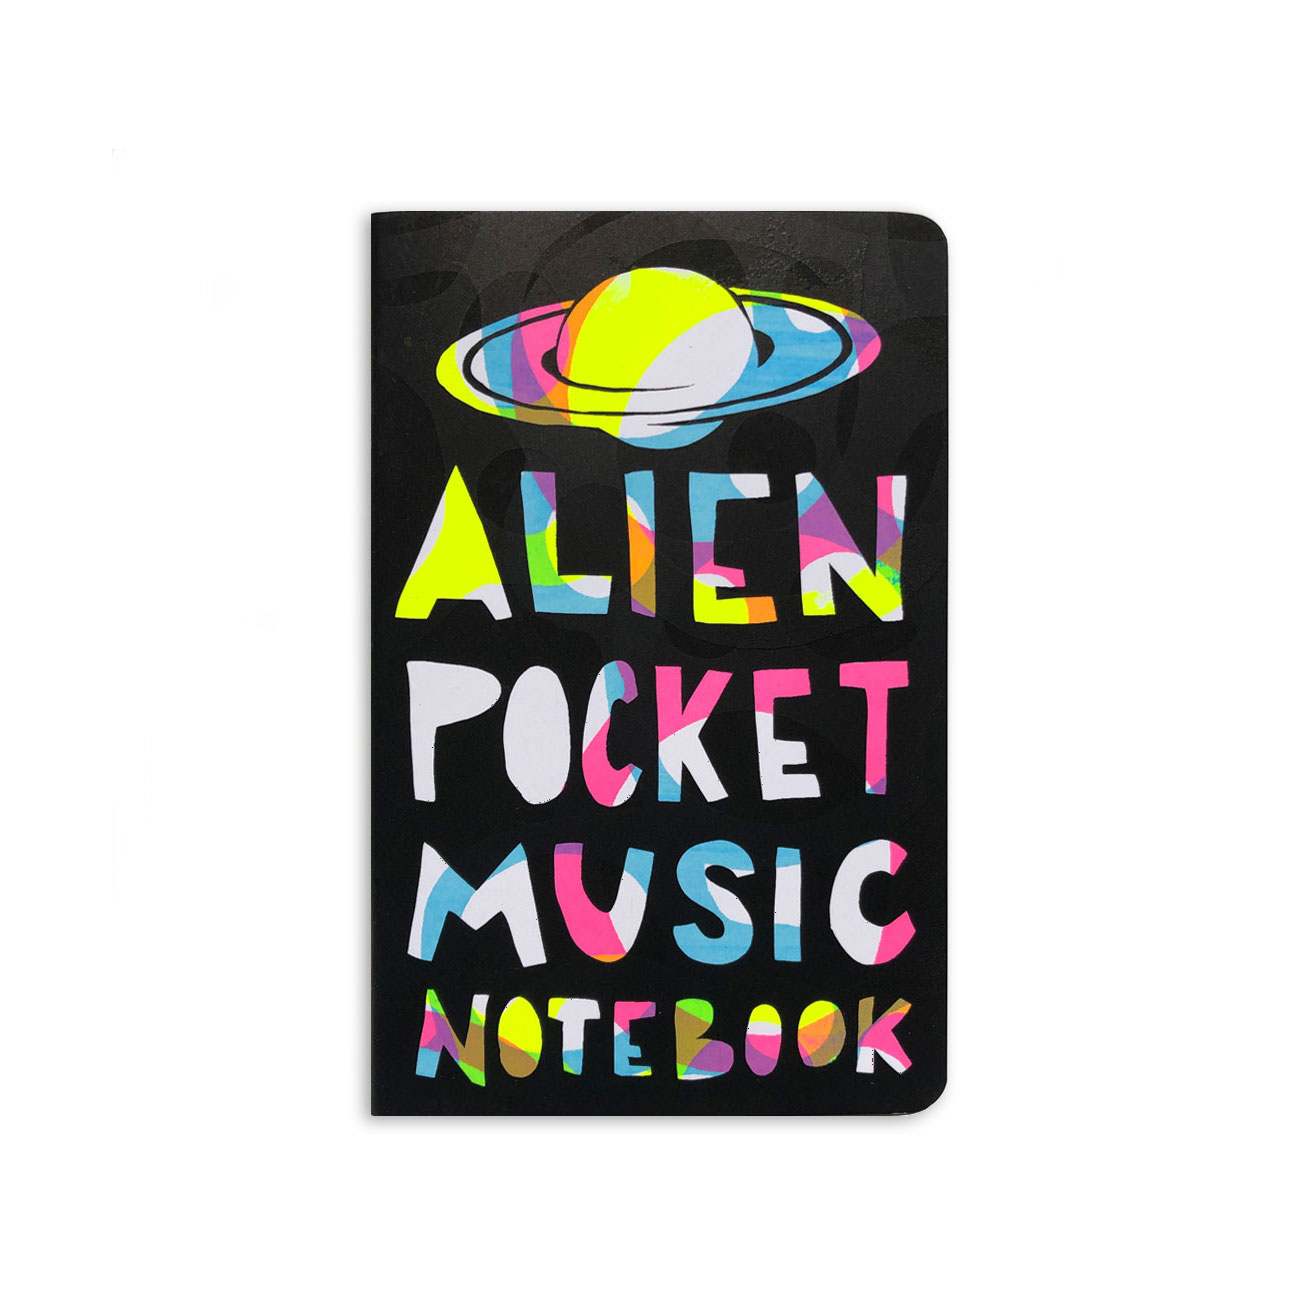 SEÑOR BURNS – Notebook ALIEN POCKET MUSIC